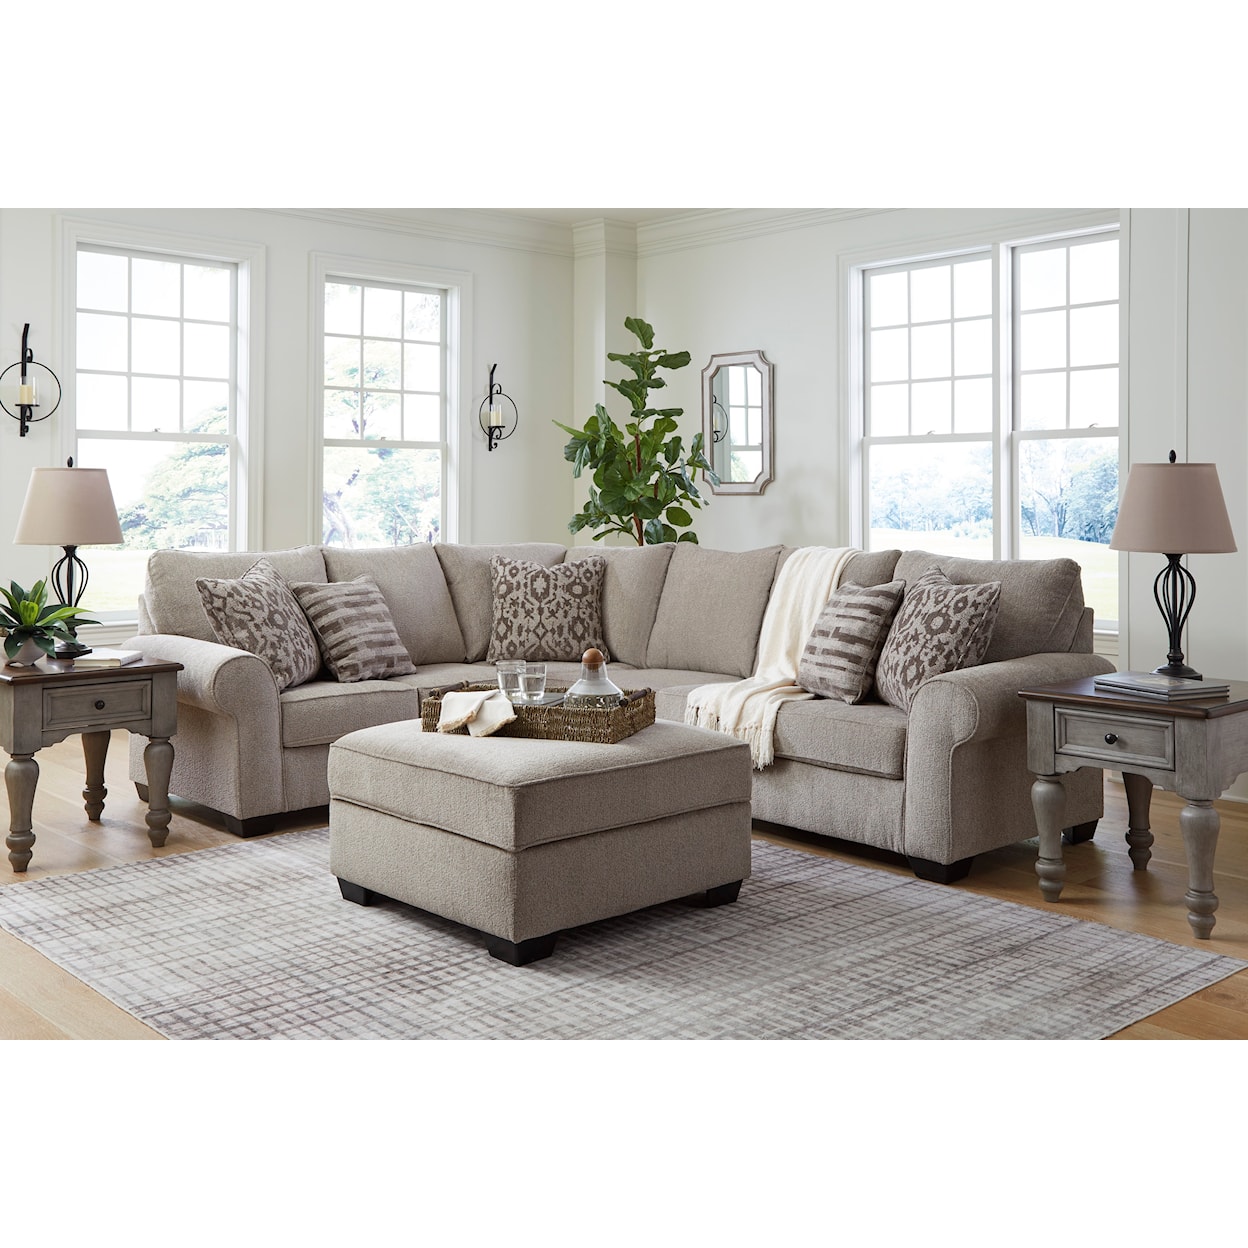 Ashley Furniture Signature Design Claireah Casual Living Room Set